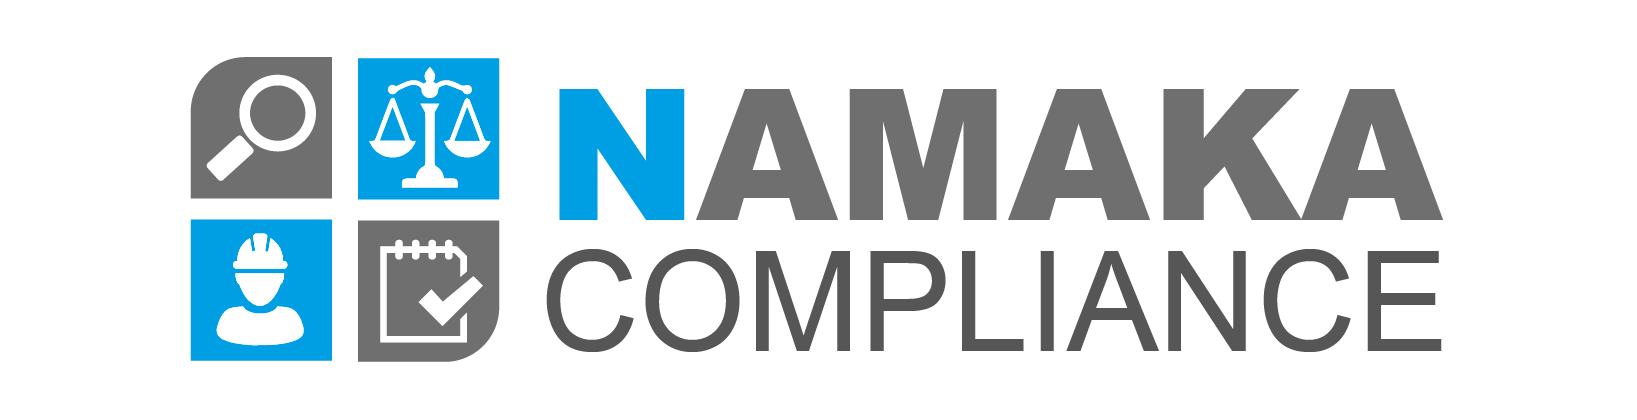 Namaka Compliance logo